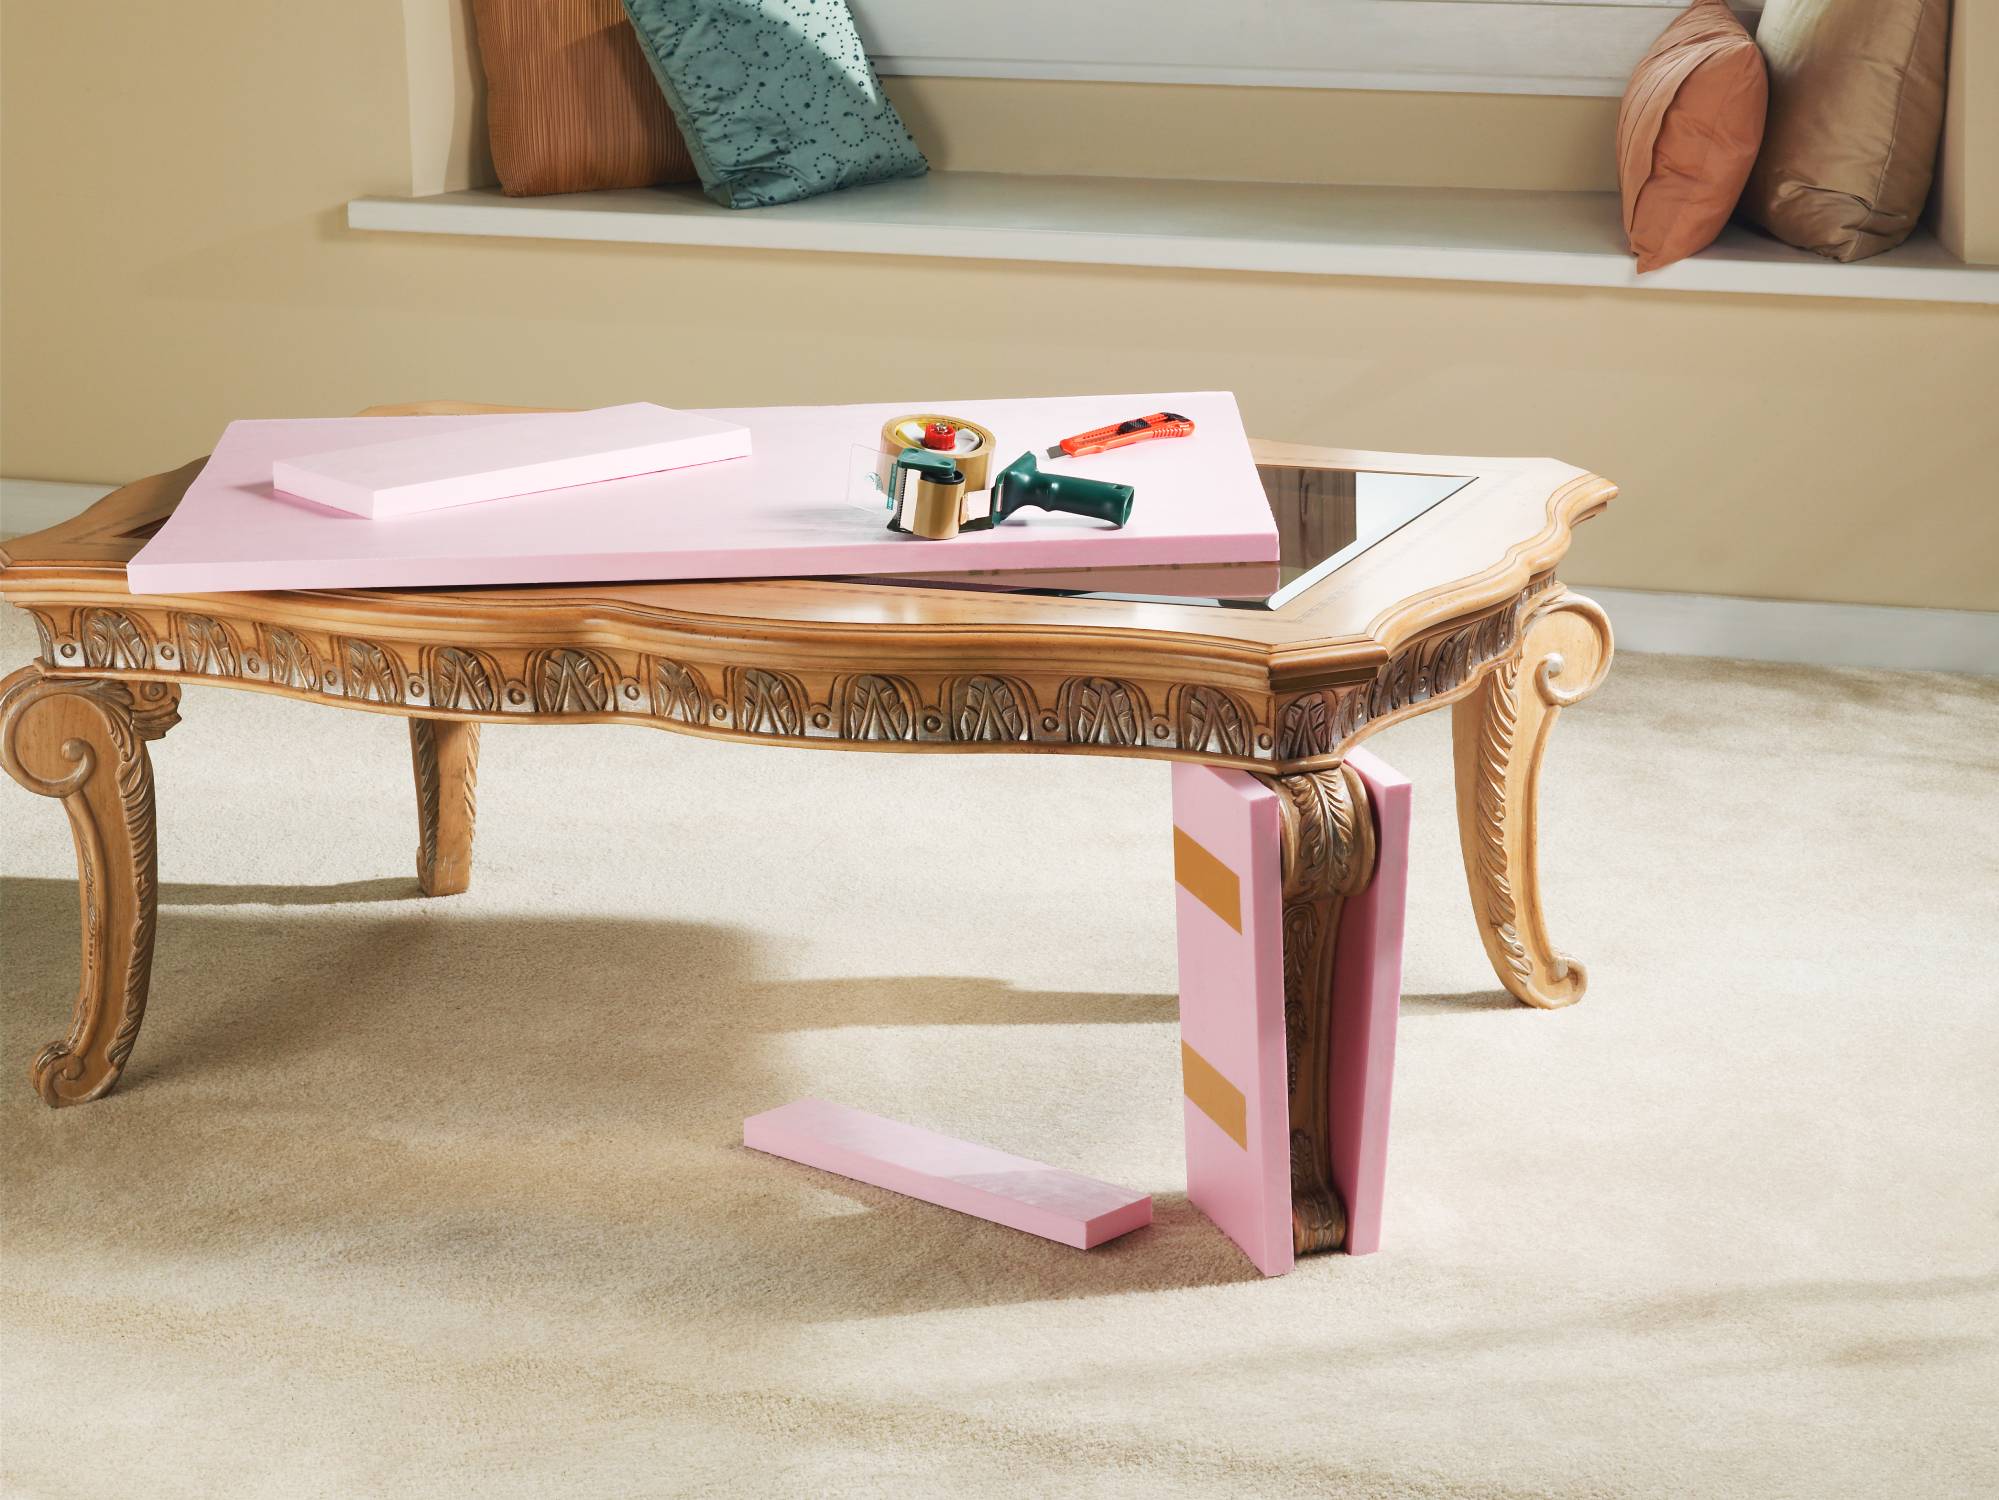 OR table setup. Above: egg-crate foam. Below: Pink Pad®